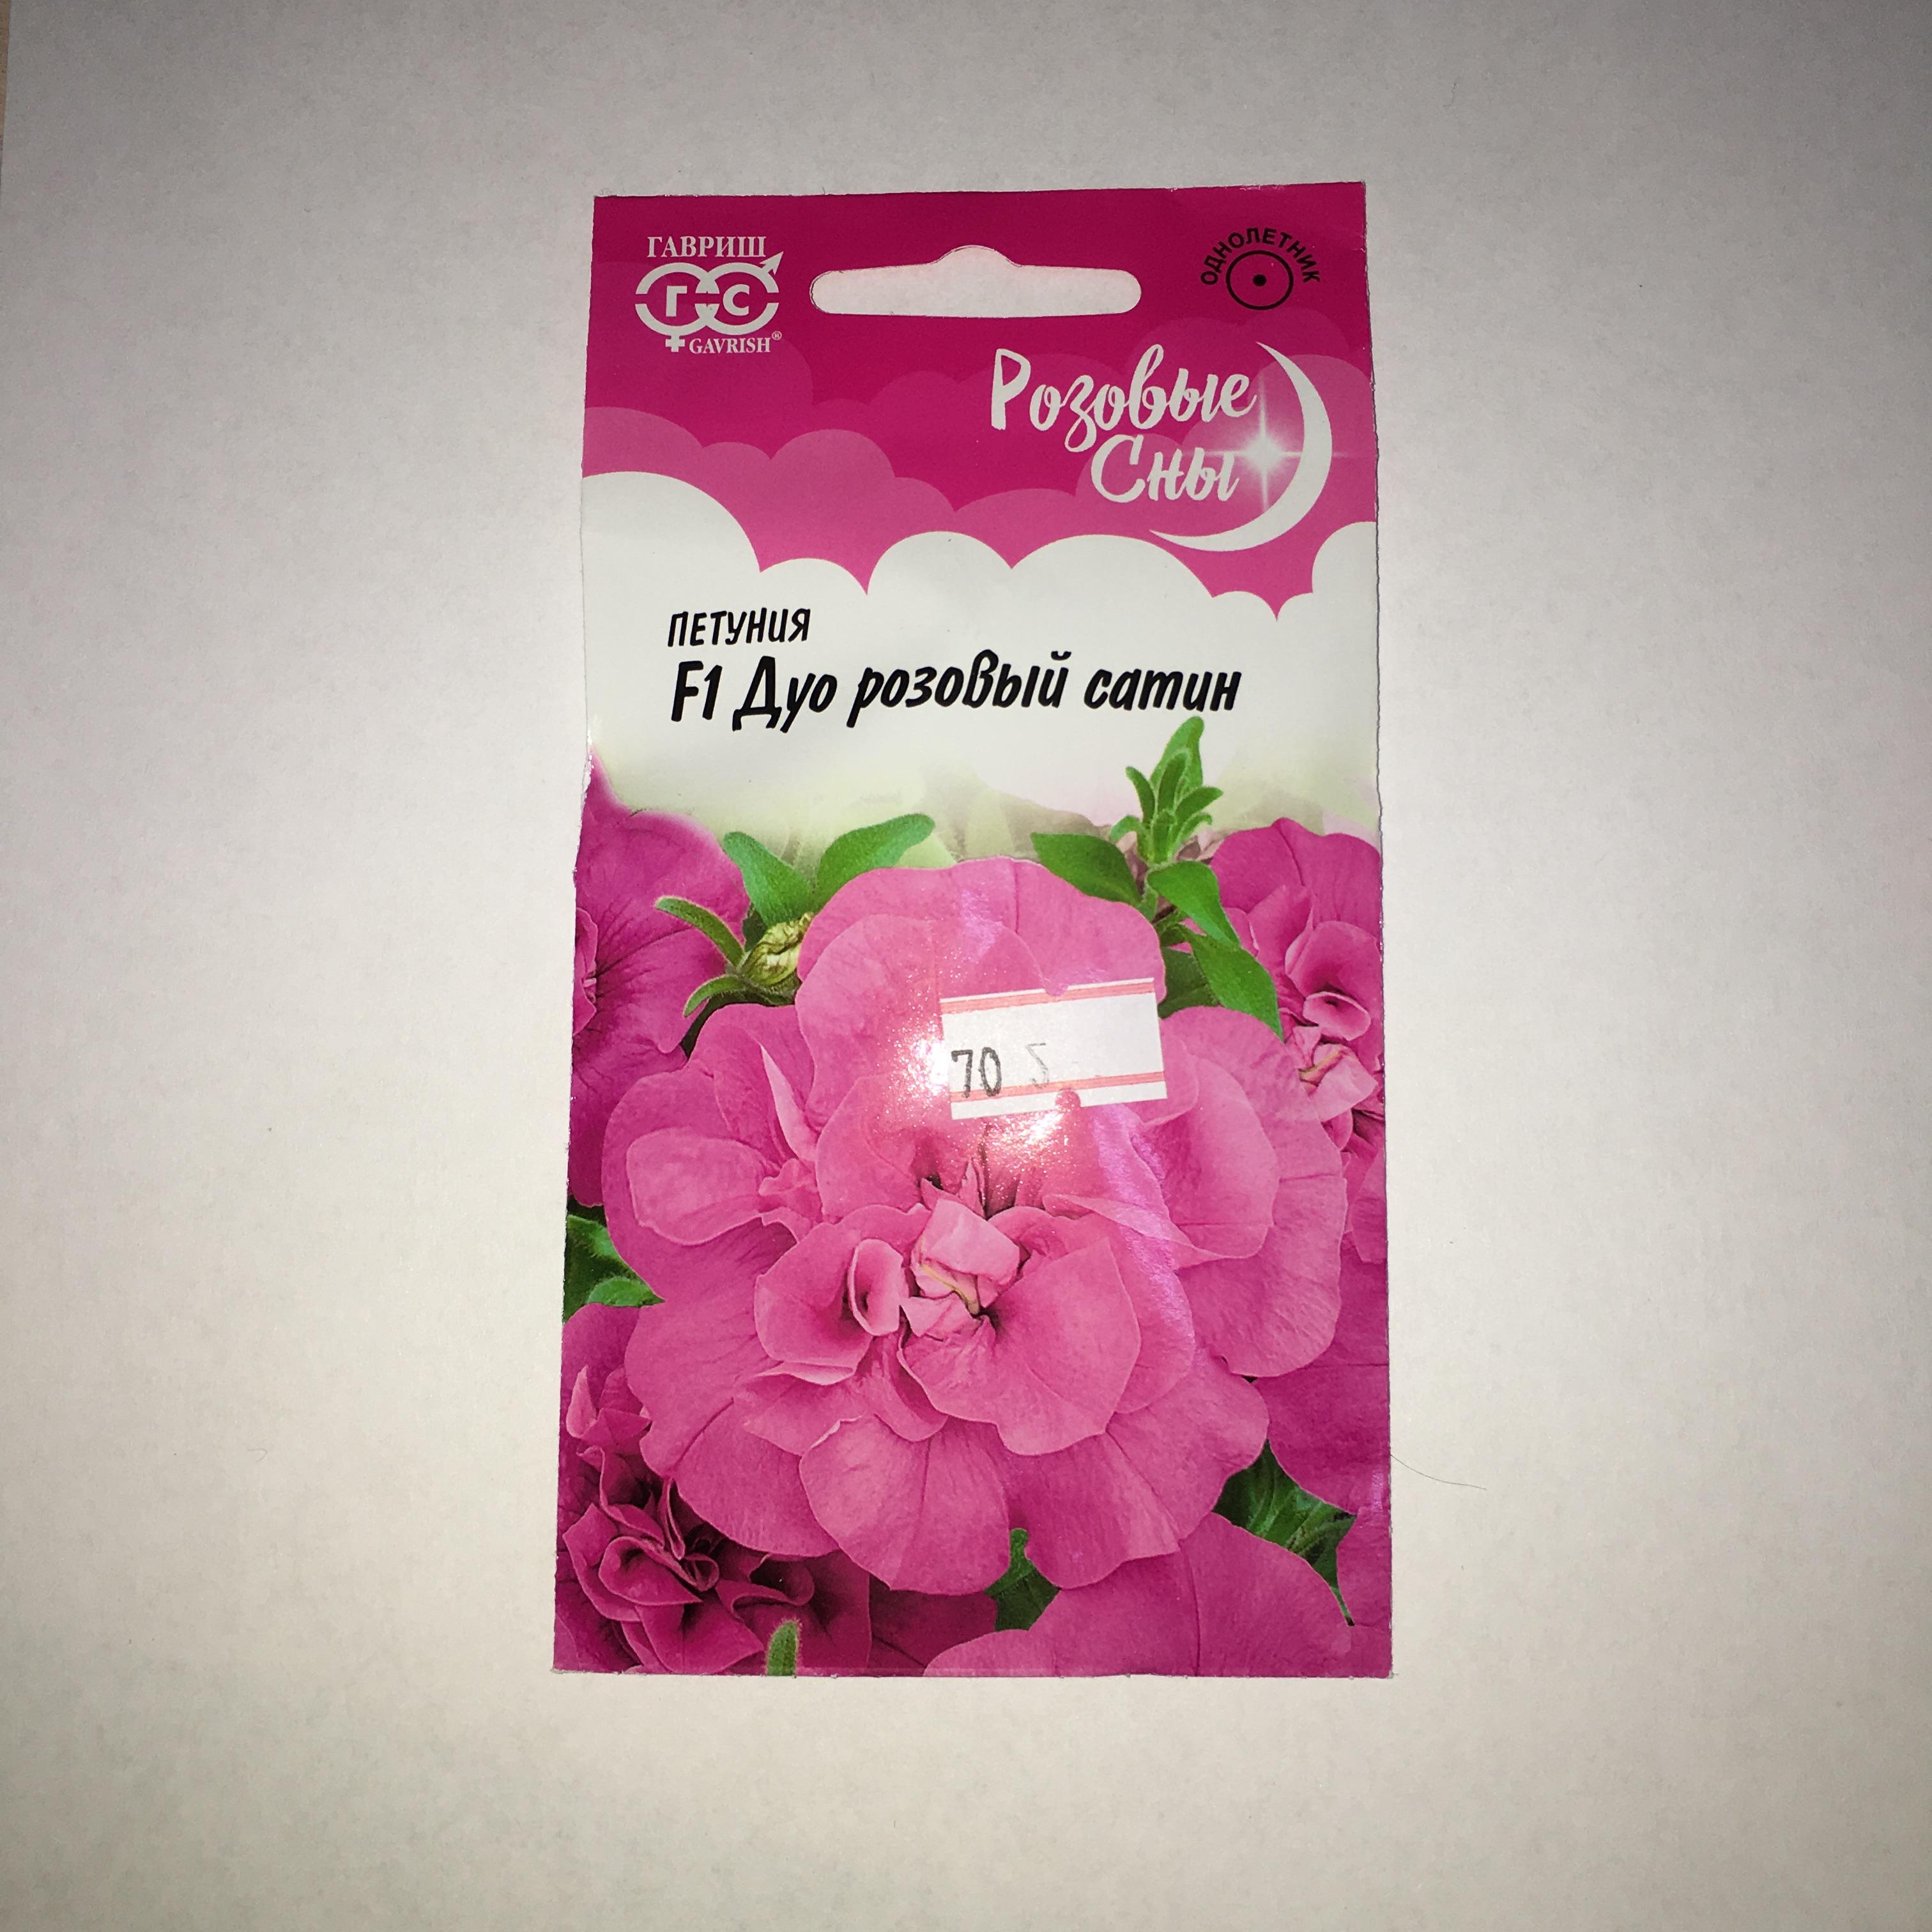 (1230) Петуния F1 дуо розовый сатин